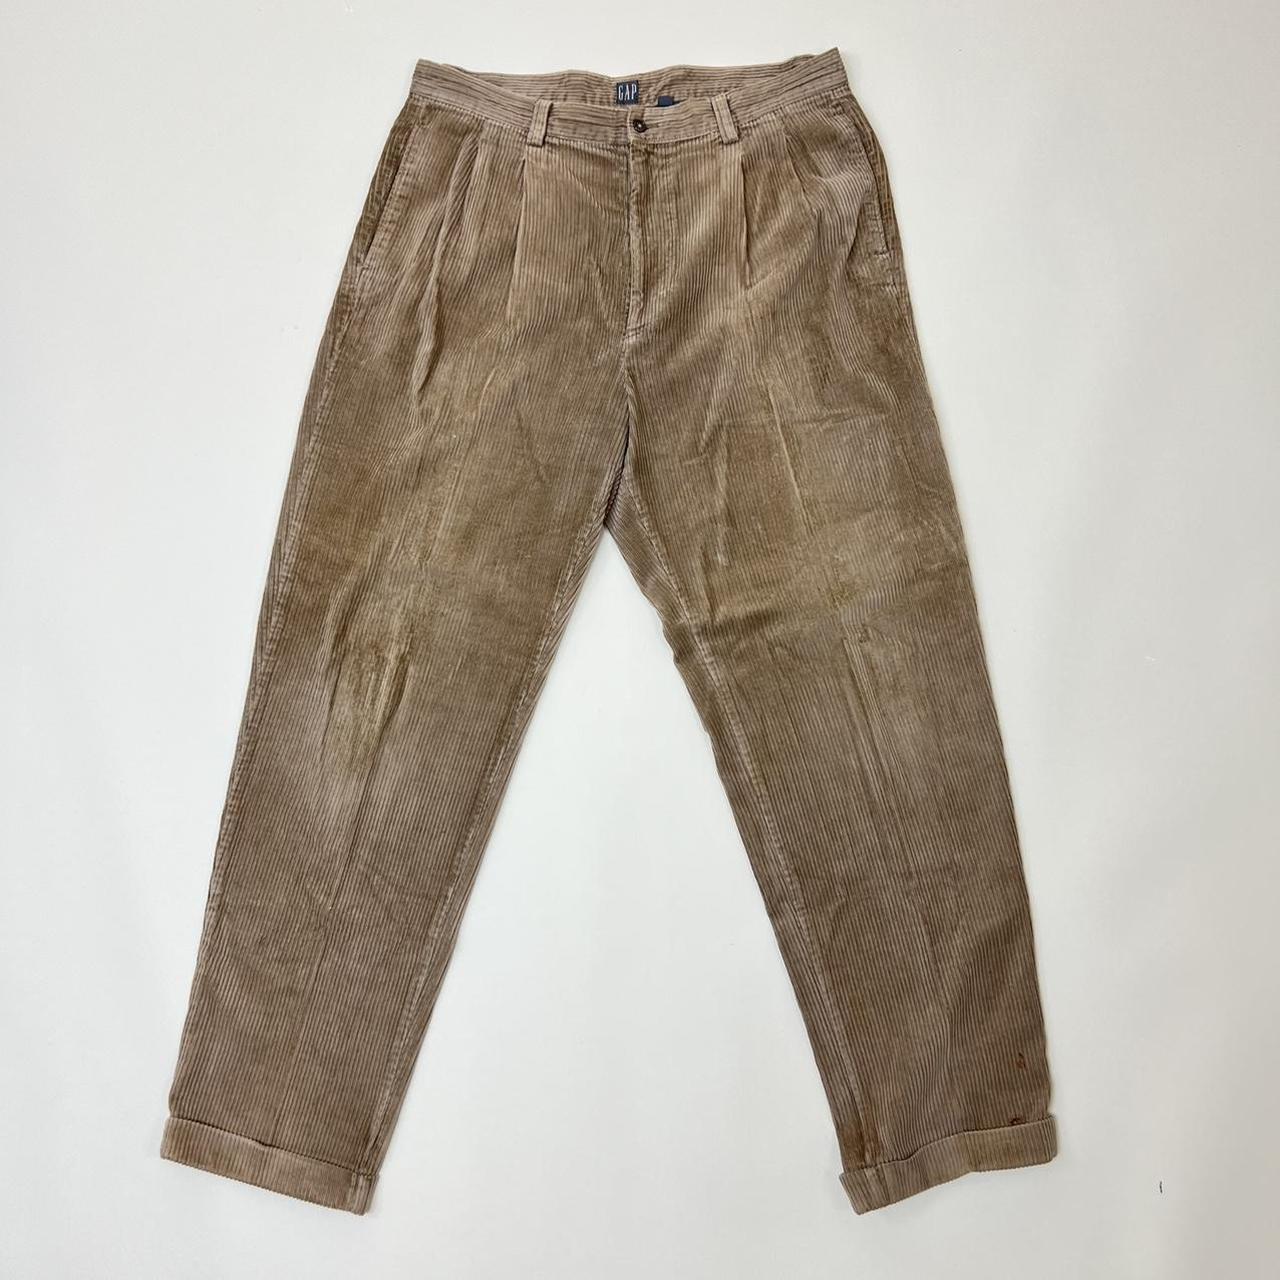 Gap corduroy pants vintage 90s super baggy. These... - Depop